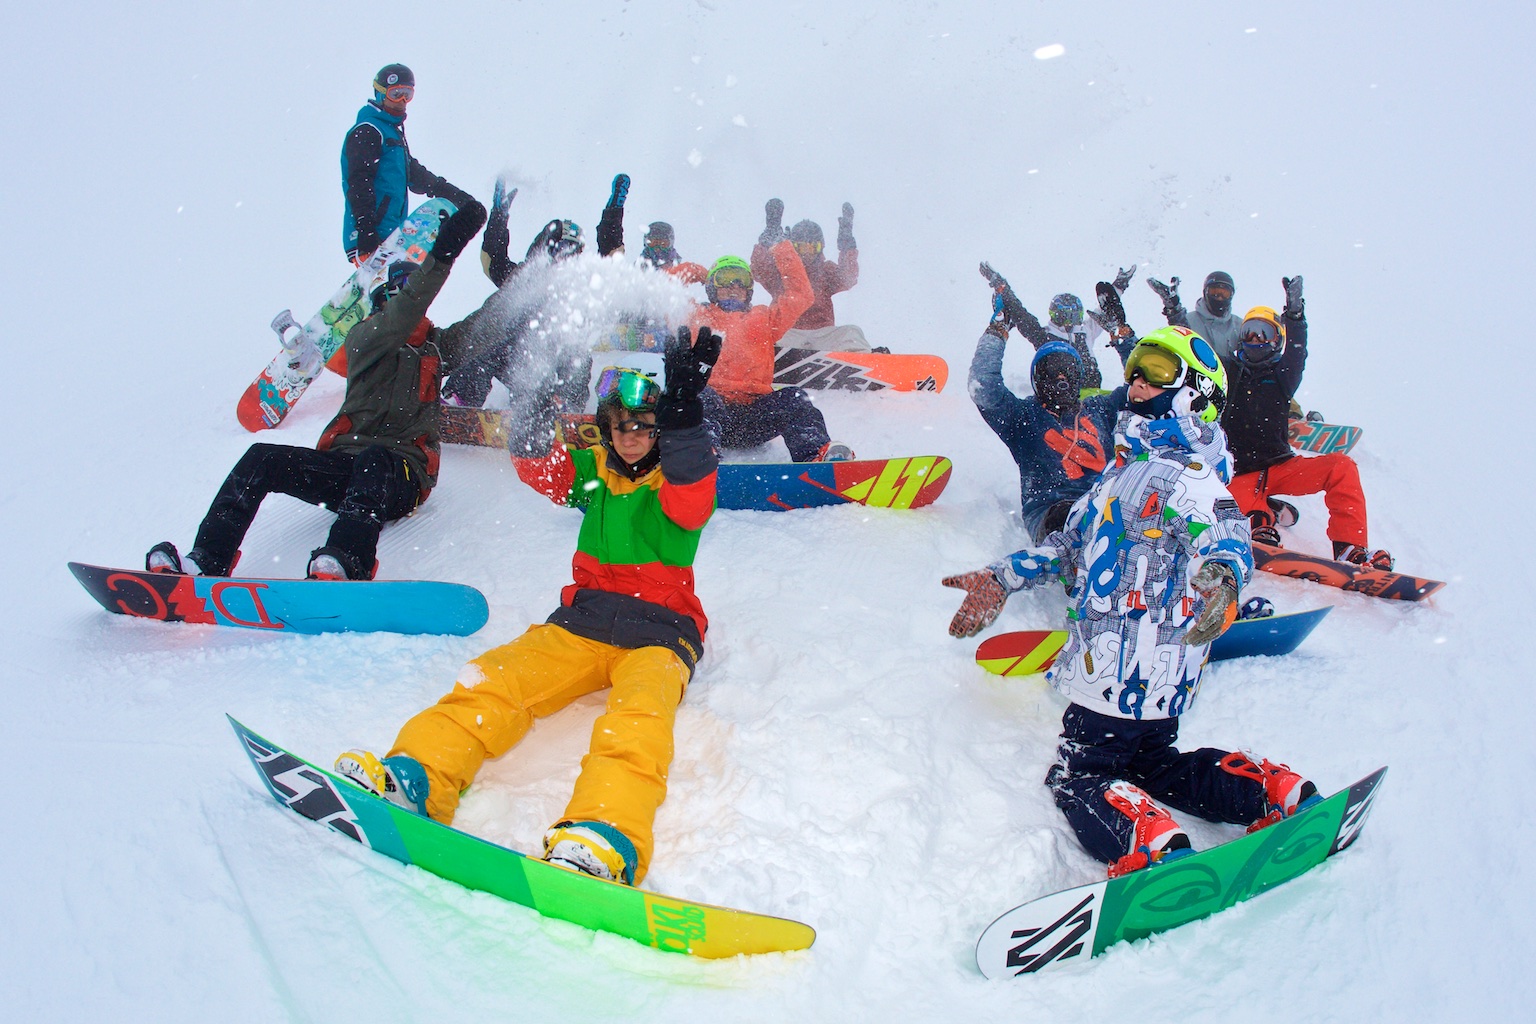 Zillertal VÄLLEY RÄLLEY hosted by Ride Snowboards 2015 / 2016 Startschuss im Betterpark Hochzillertal